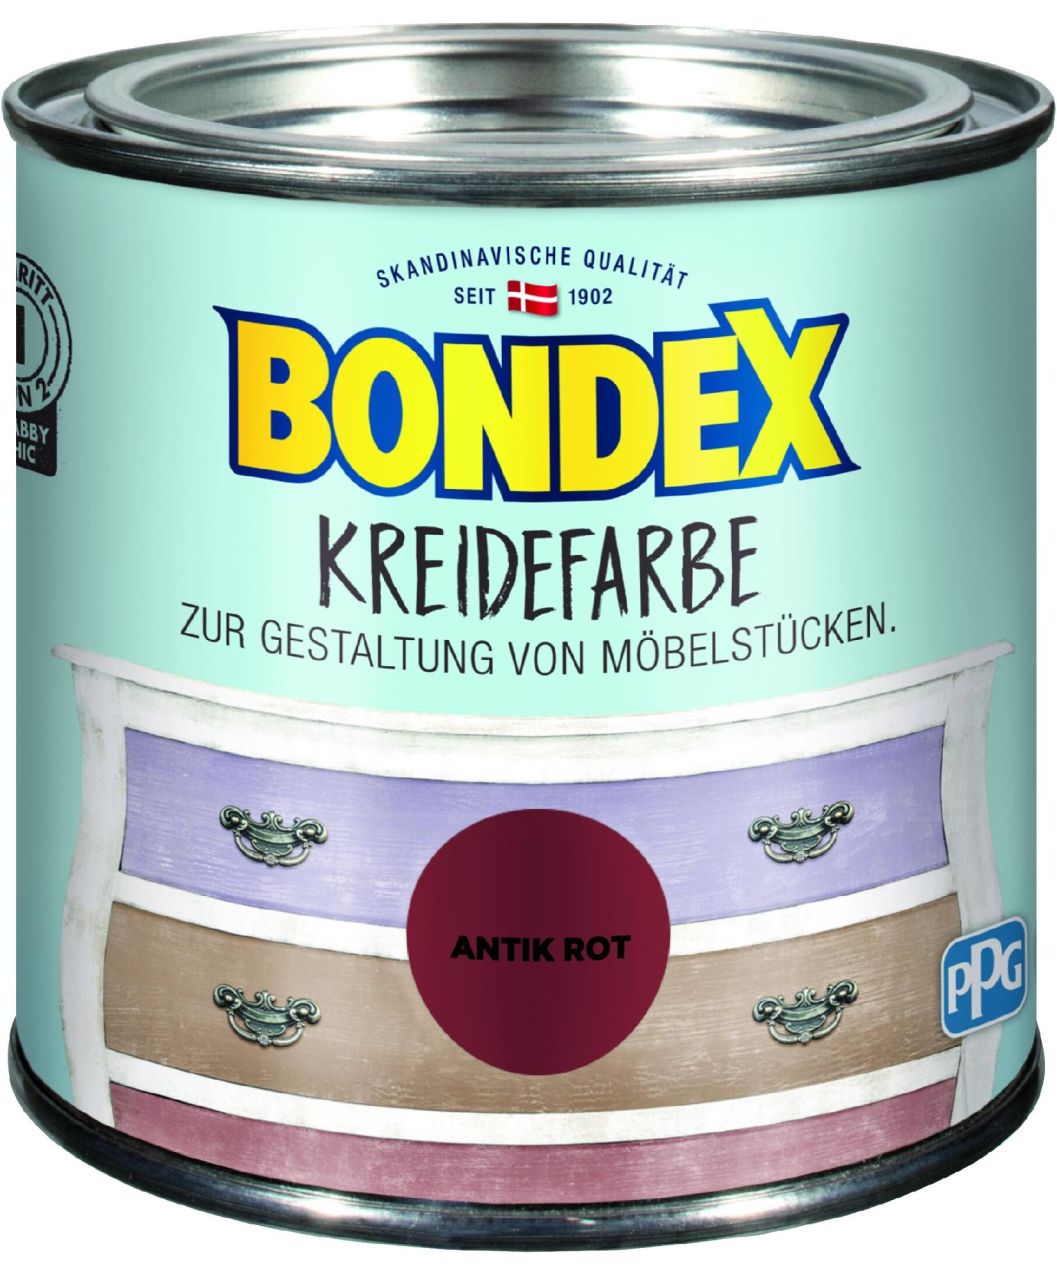 Bondex Kreidefarbe 500 ml antik rot von Bondex